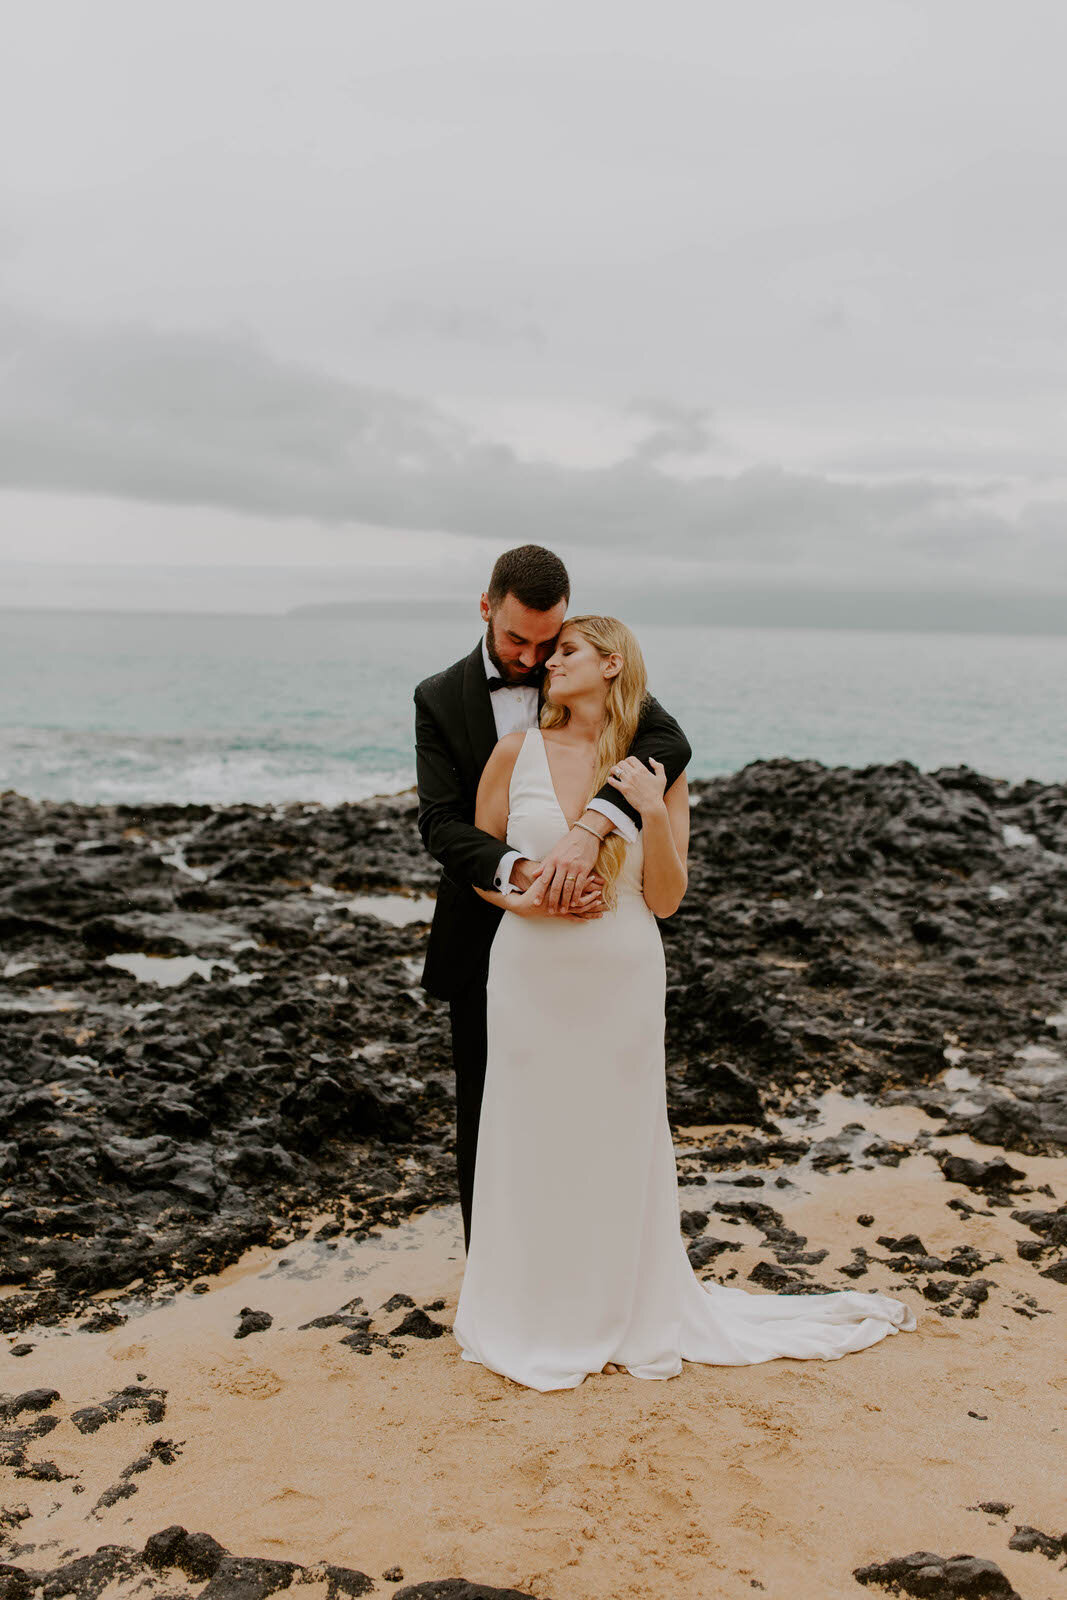 Brianna-Broyles-Photography-Fairmont-Kea-Lani-Wedding-Maui-Photographer-54.jpg